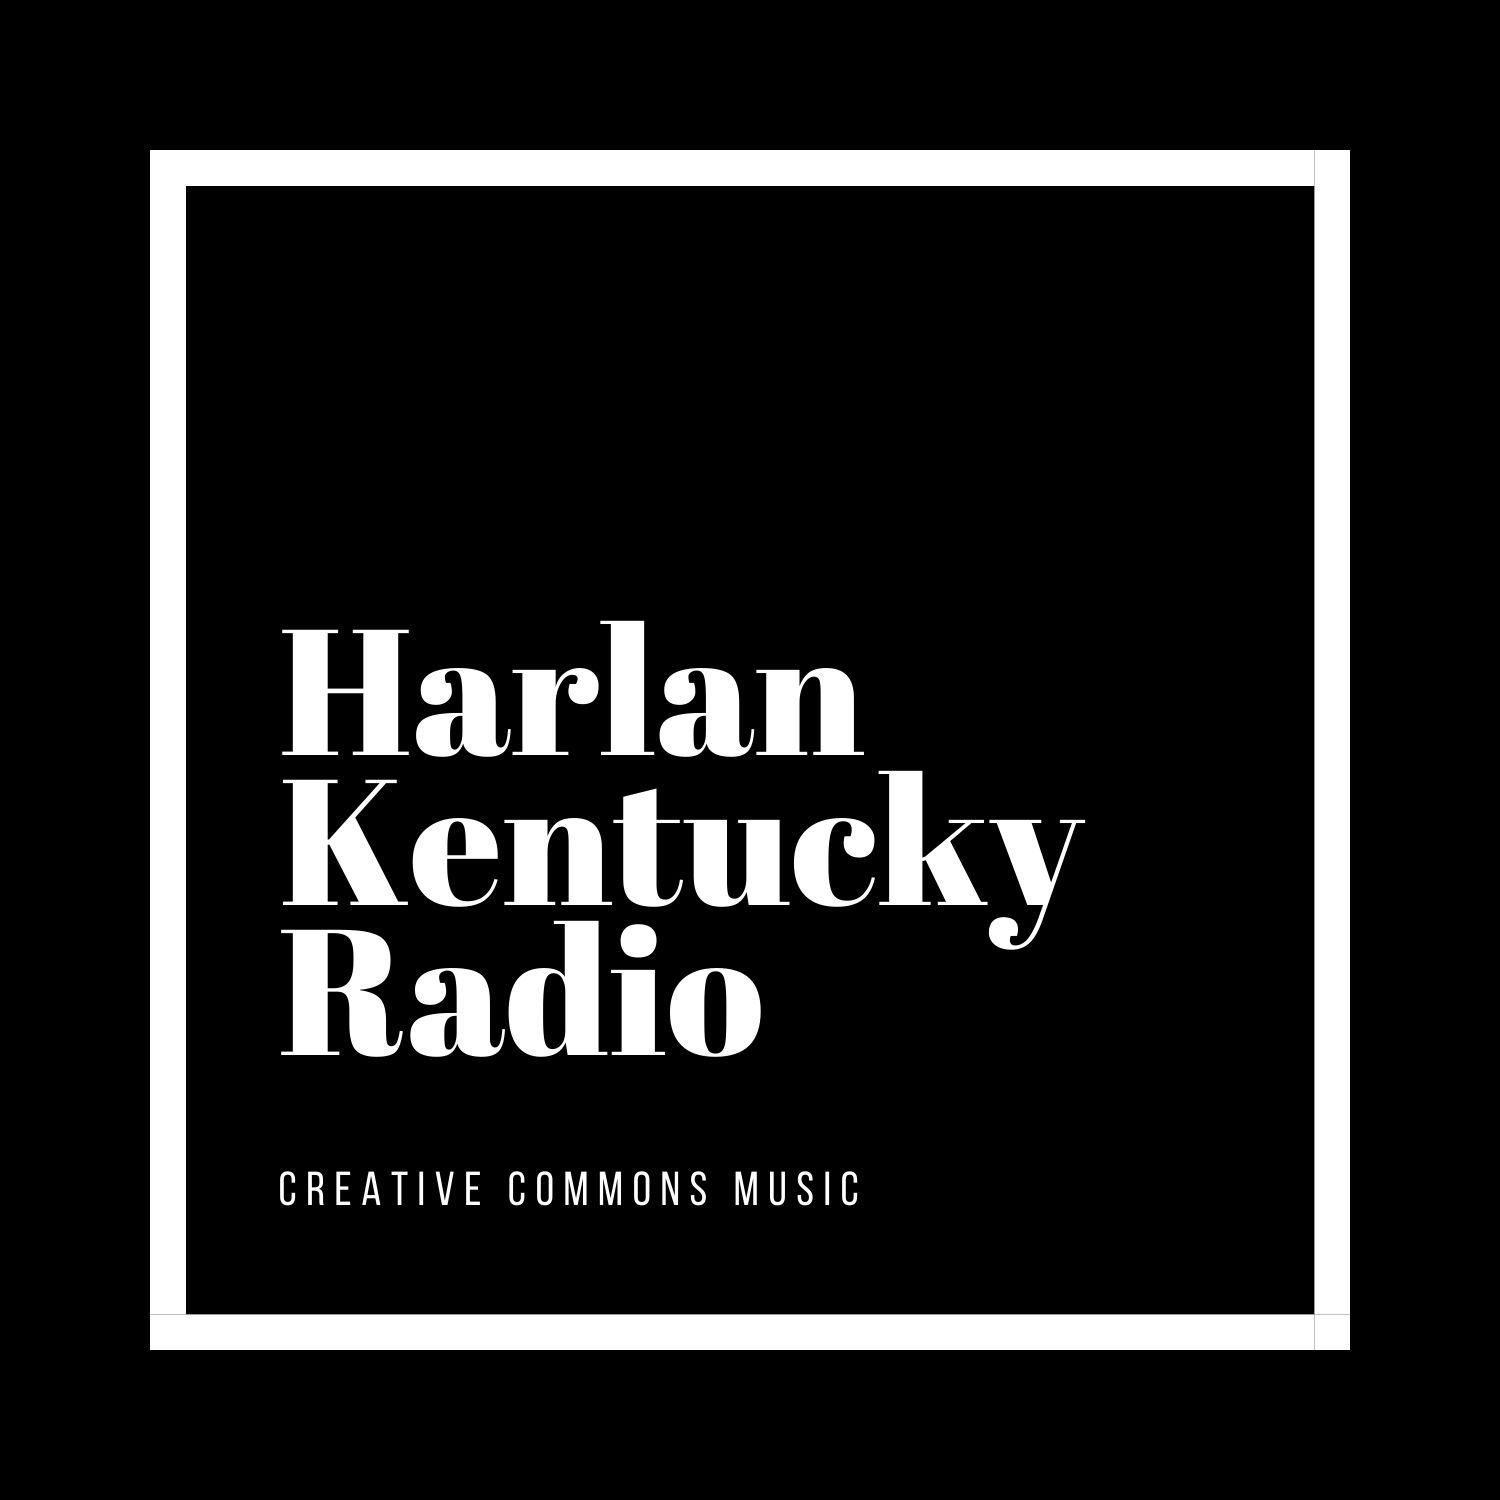 Harlan Kentucky Radio